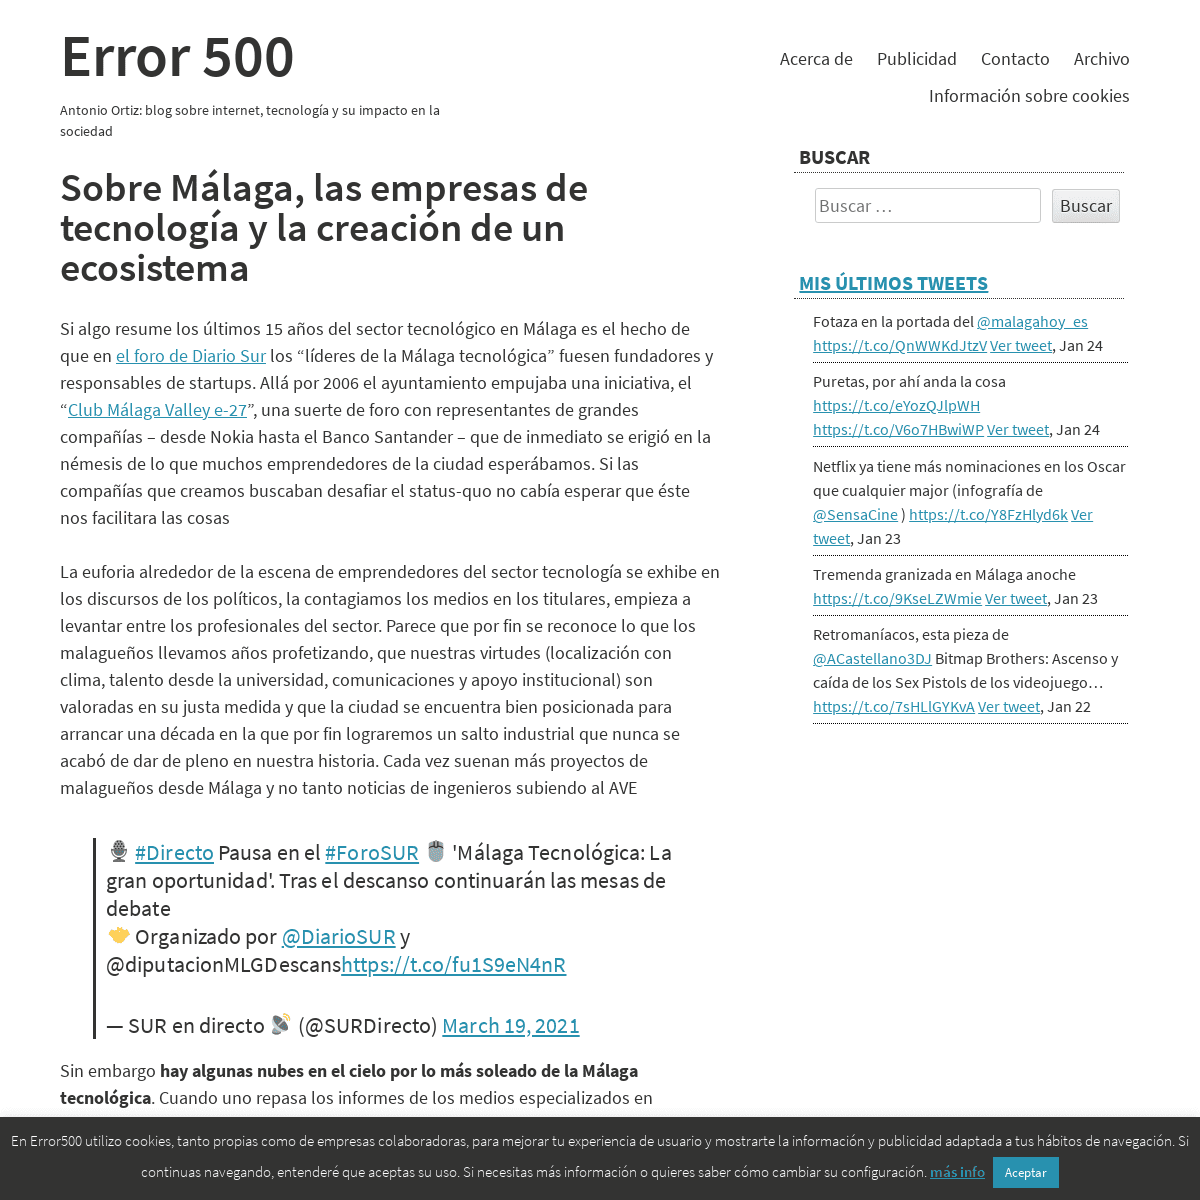 A complete backup of https://error500.net